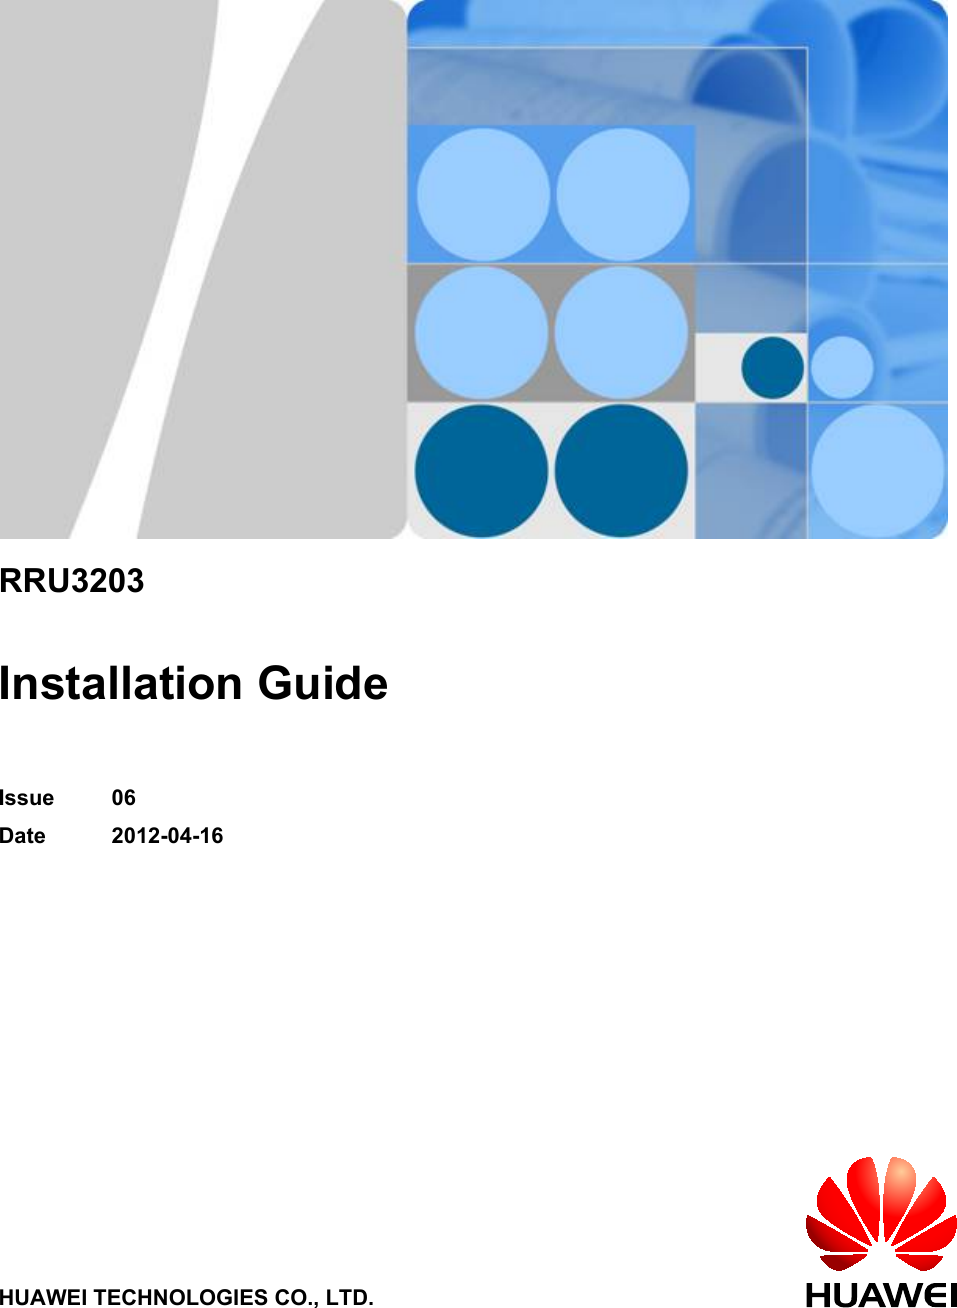 RRU3203Installation GuideIssue 06Date 2012-04-16HUAWEI TECHNOLOGIES CO., LTD.